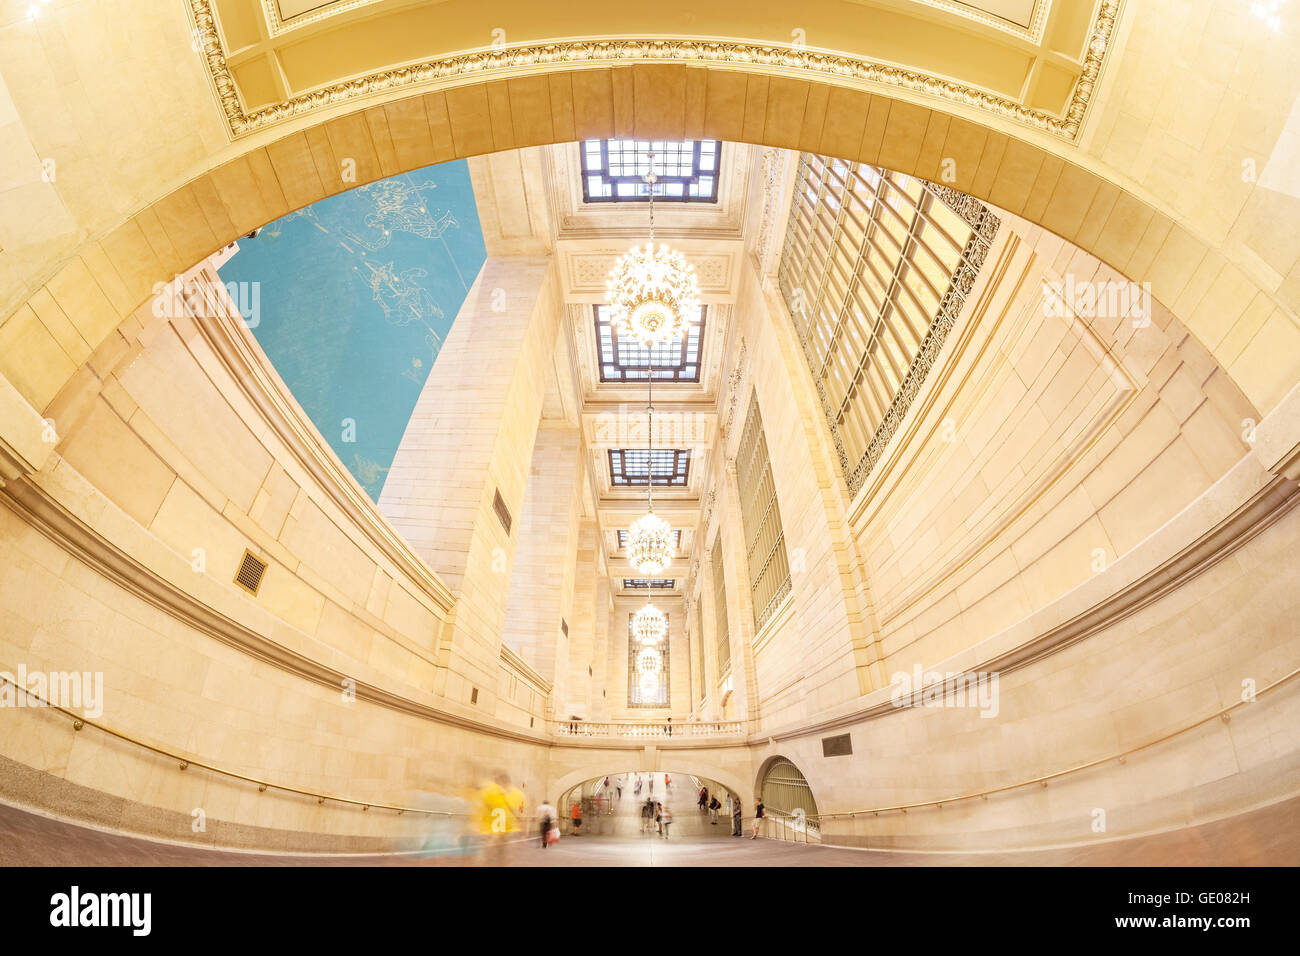 Fisheye lens photo of Grand Central Terminal interior. Stock Photo